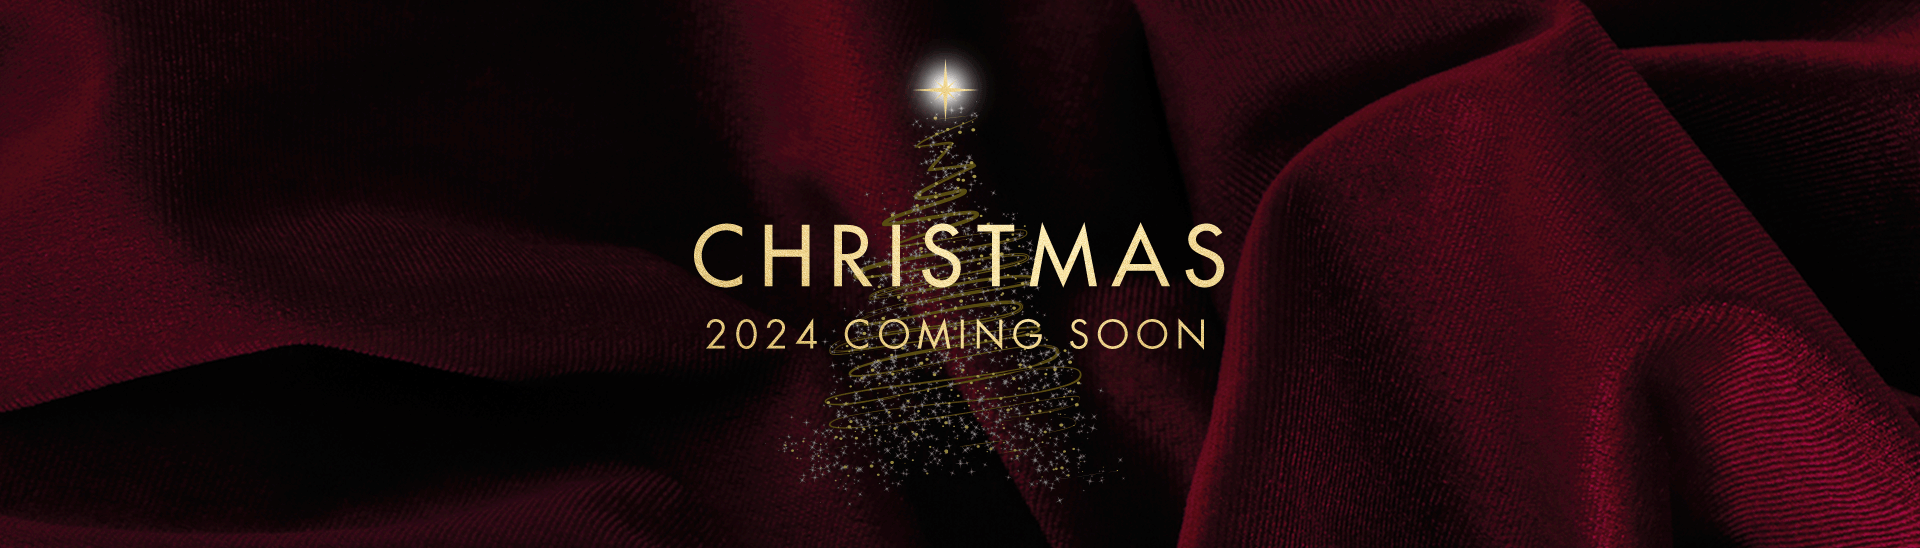 Christmas 2024 at Lancashire